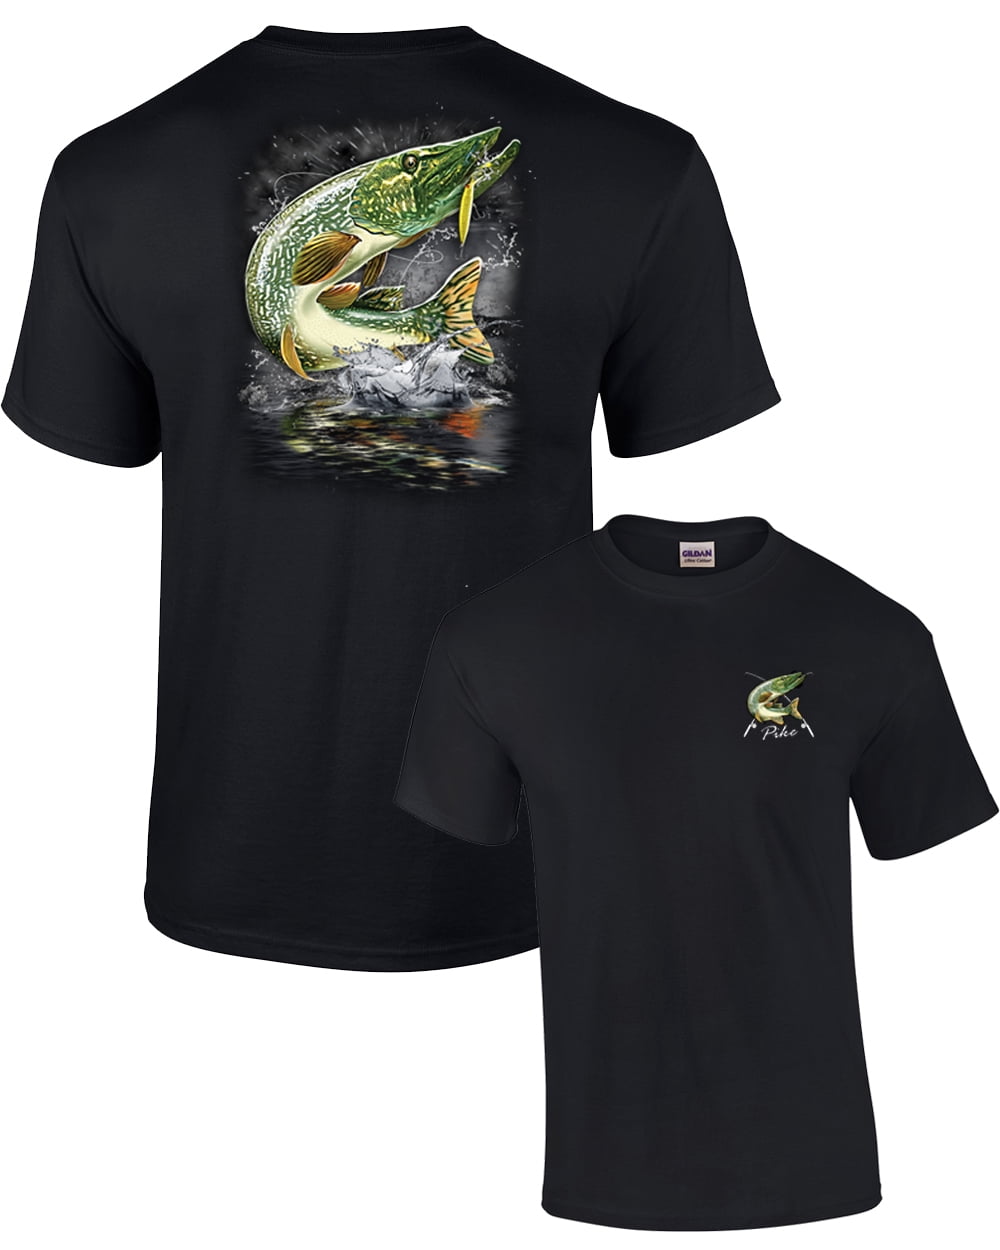 Fire Fit Designs Fishing Shirts for Men - Fishing Shirt - Mens Fishing Shirts - Fishing Master T-Shirt - Fishing Gift Shirt, Men's, Size: Small, Black